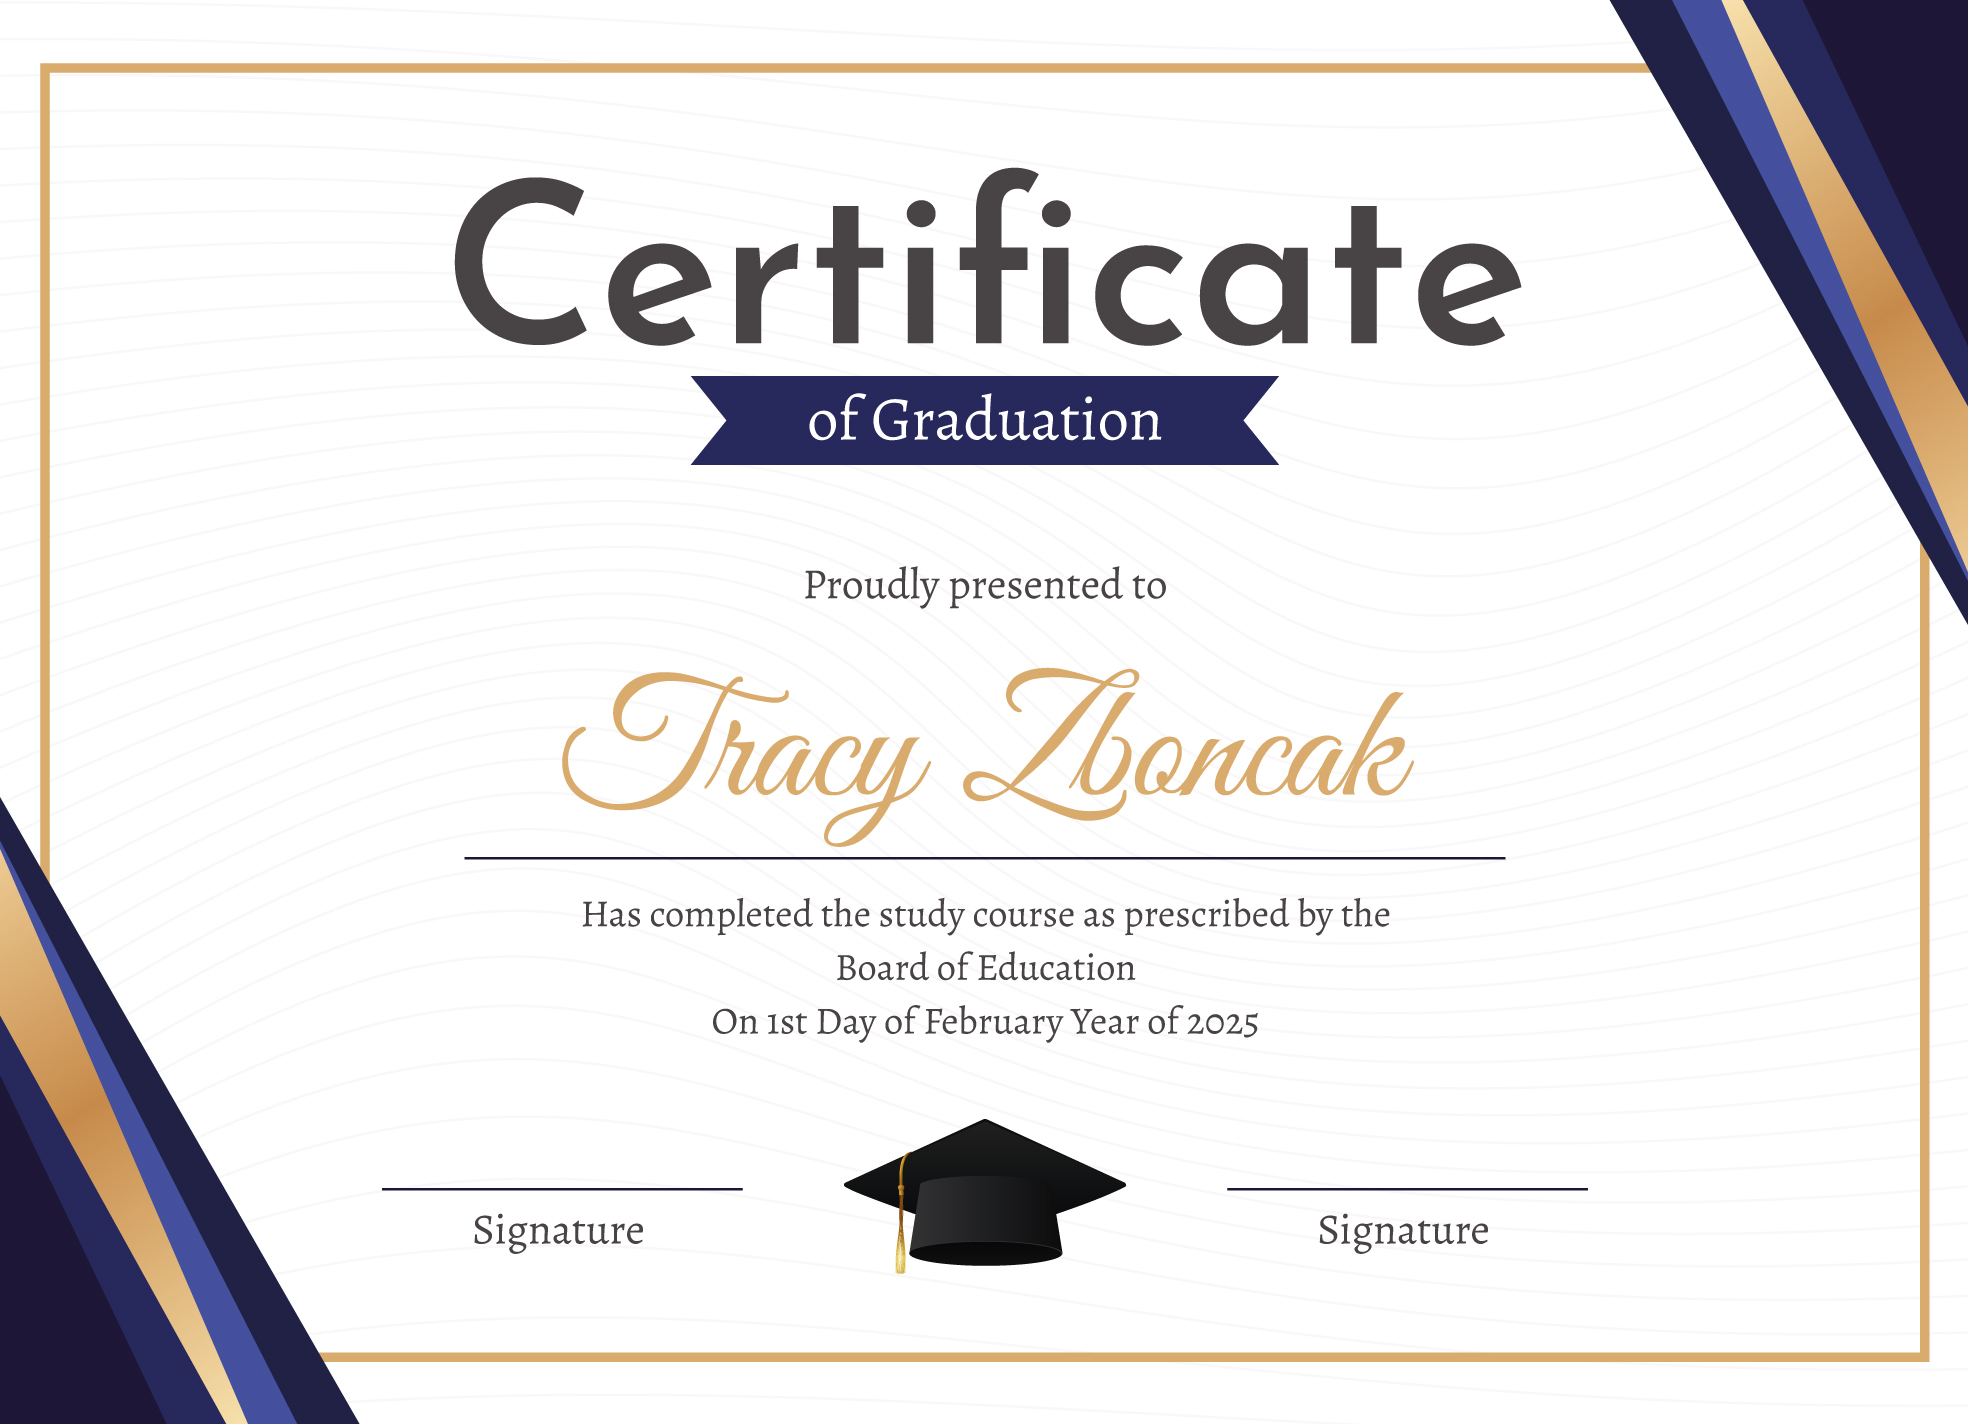 doctorate certificate template